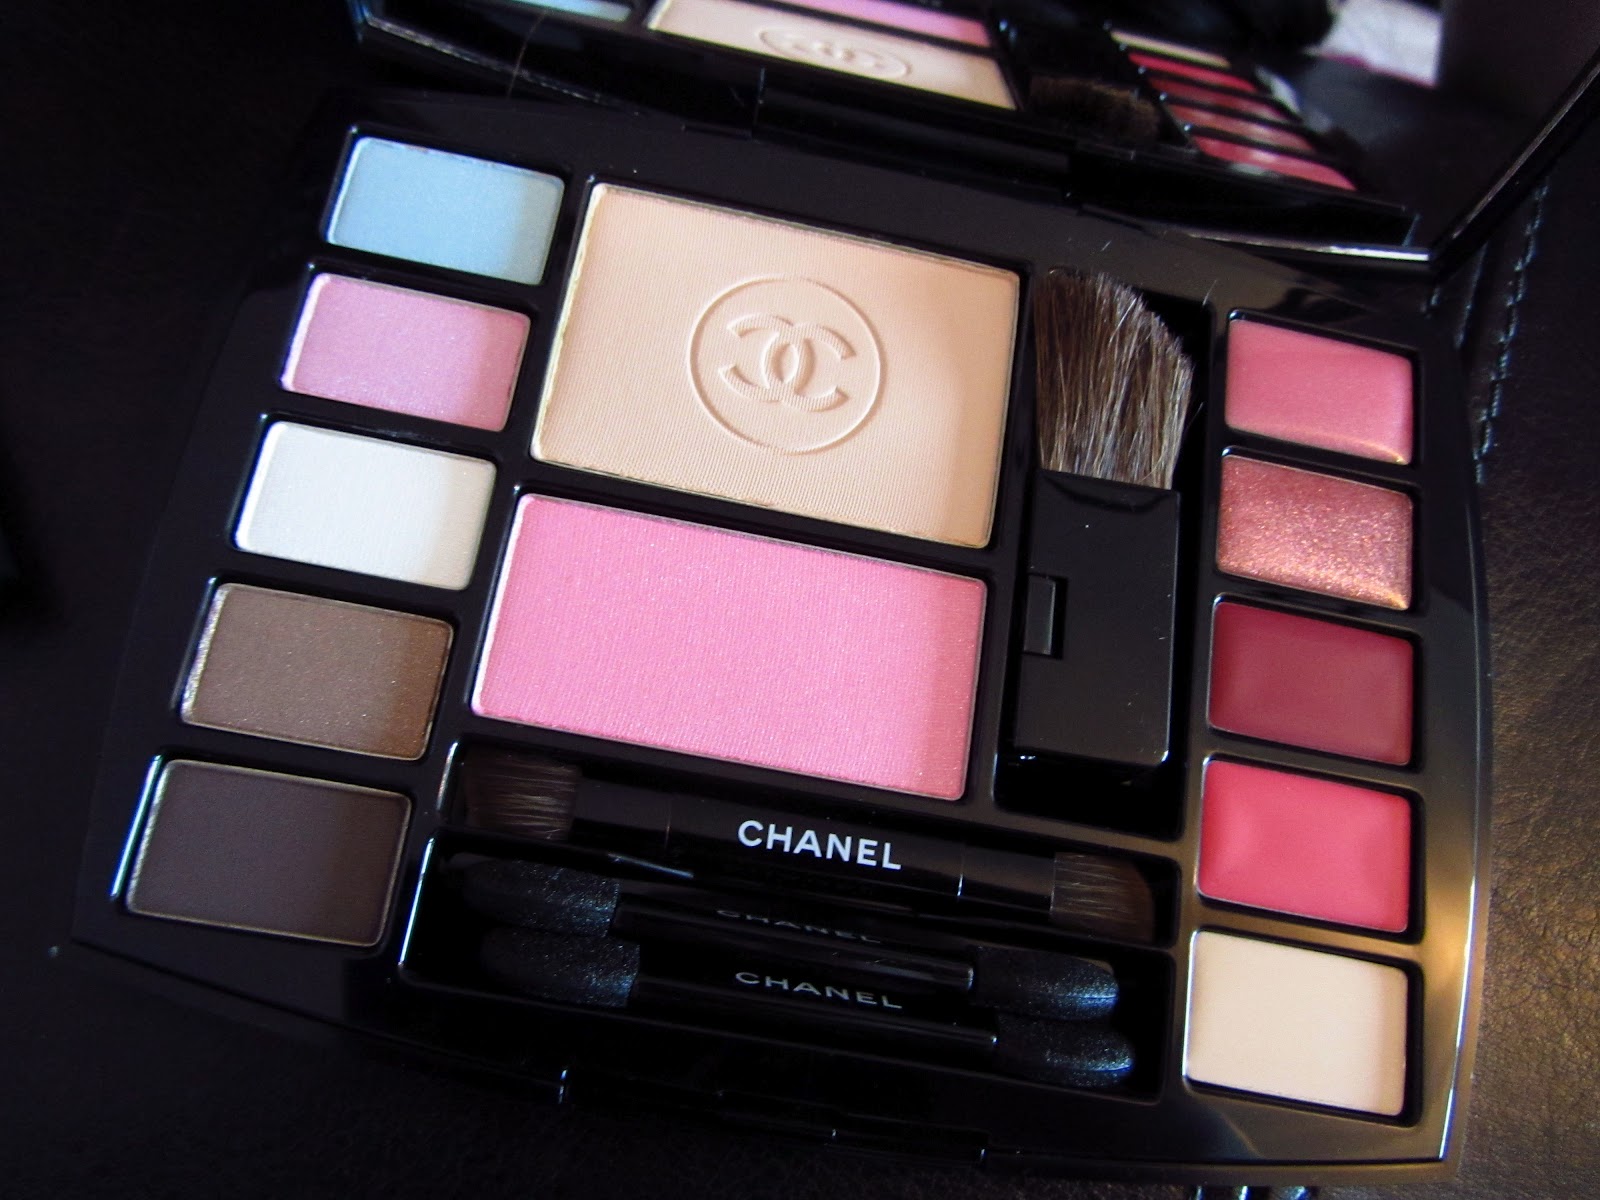 COCOBELLA BALLERINA Chanel Duty Free Travel Makeup Palette